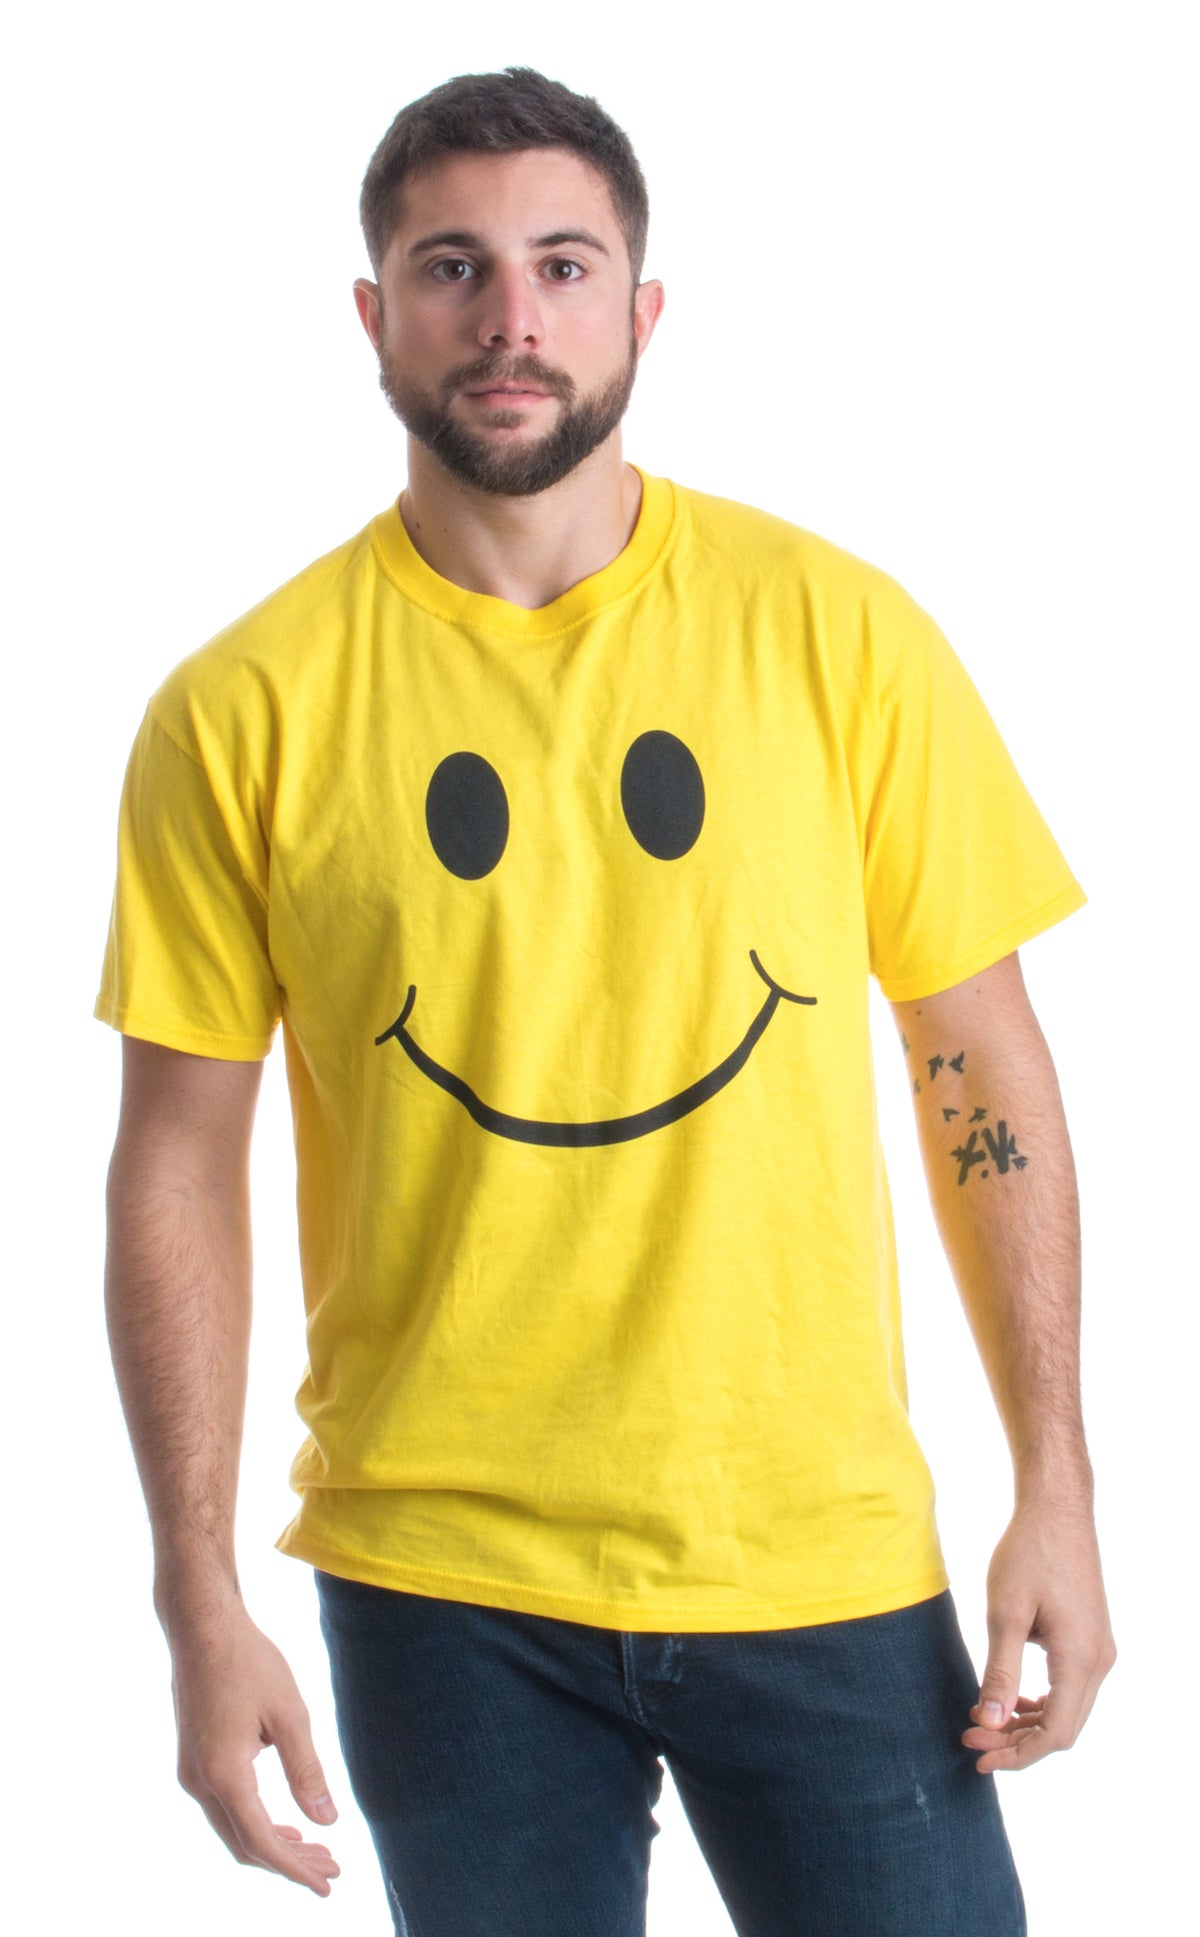 Smile Face - Cute, Smiley Positive, Happy Smiling Face Optimist Fun T-shirt